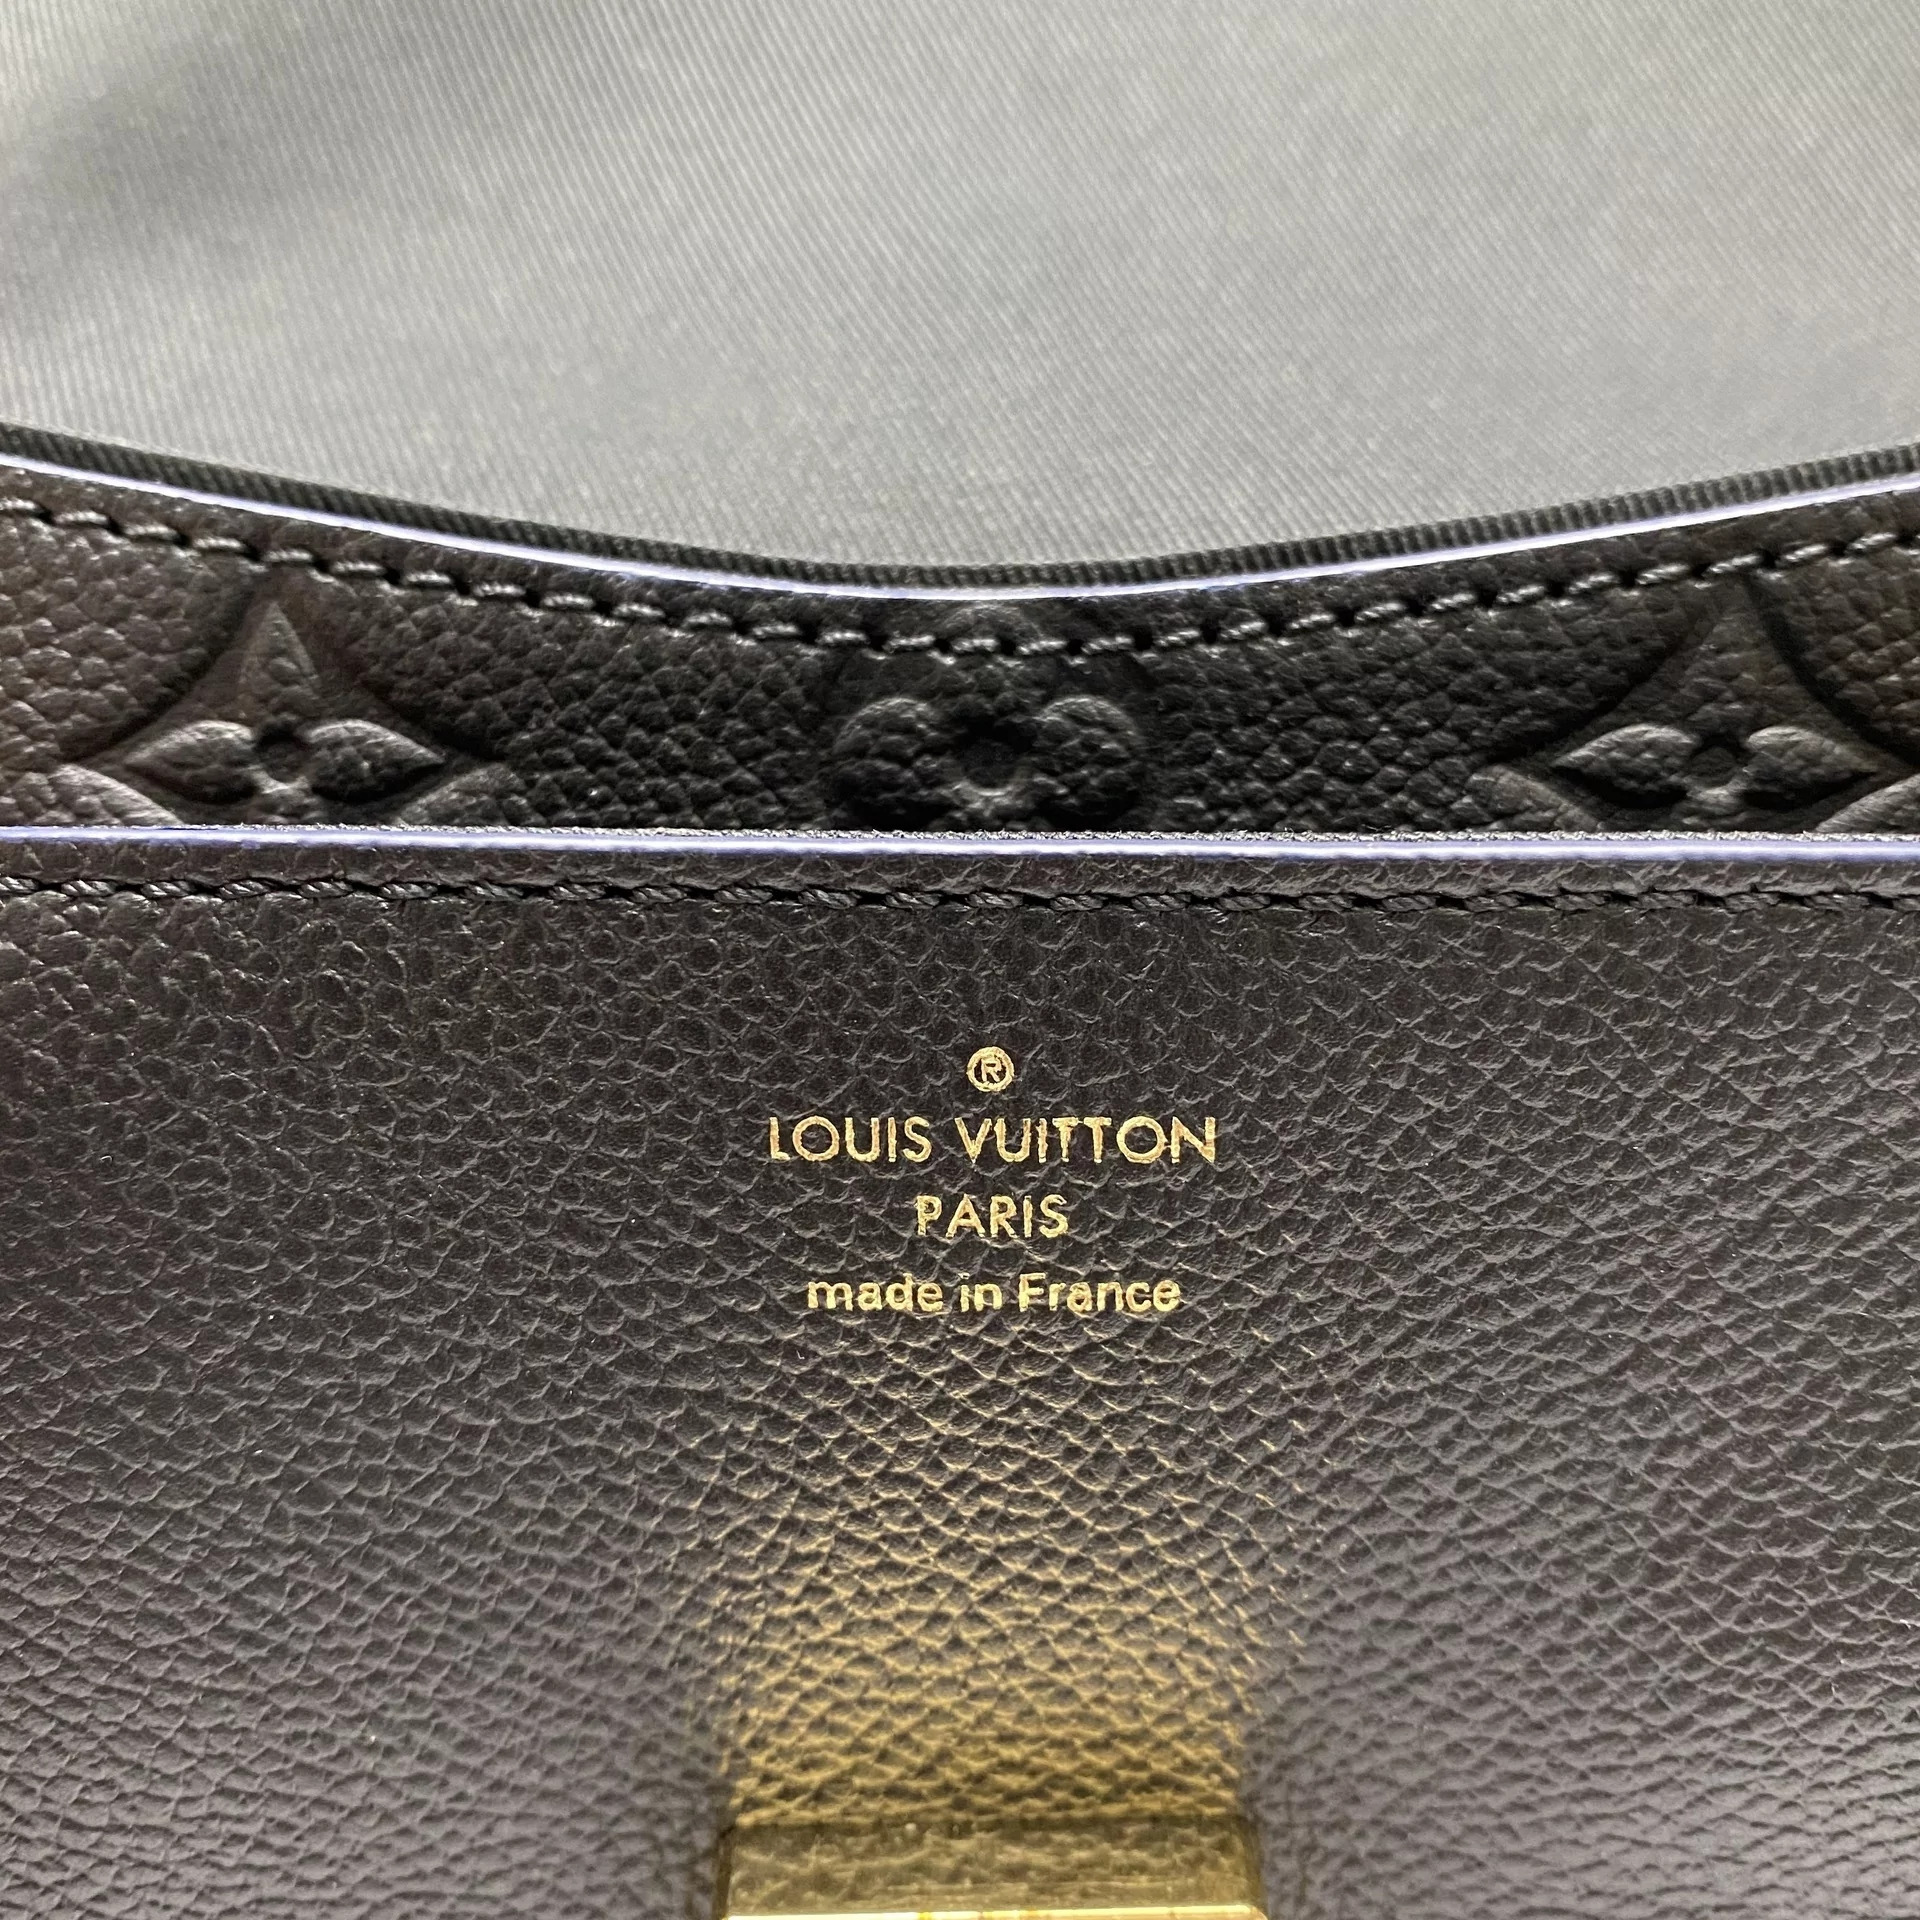 Bolsa Louis Vuitton Blanche BB 